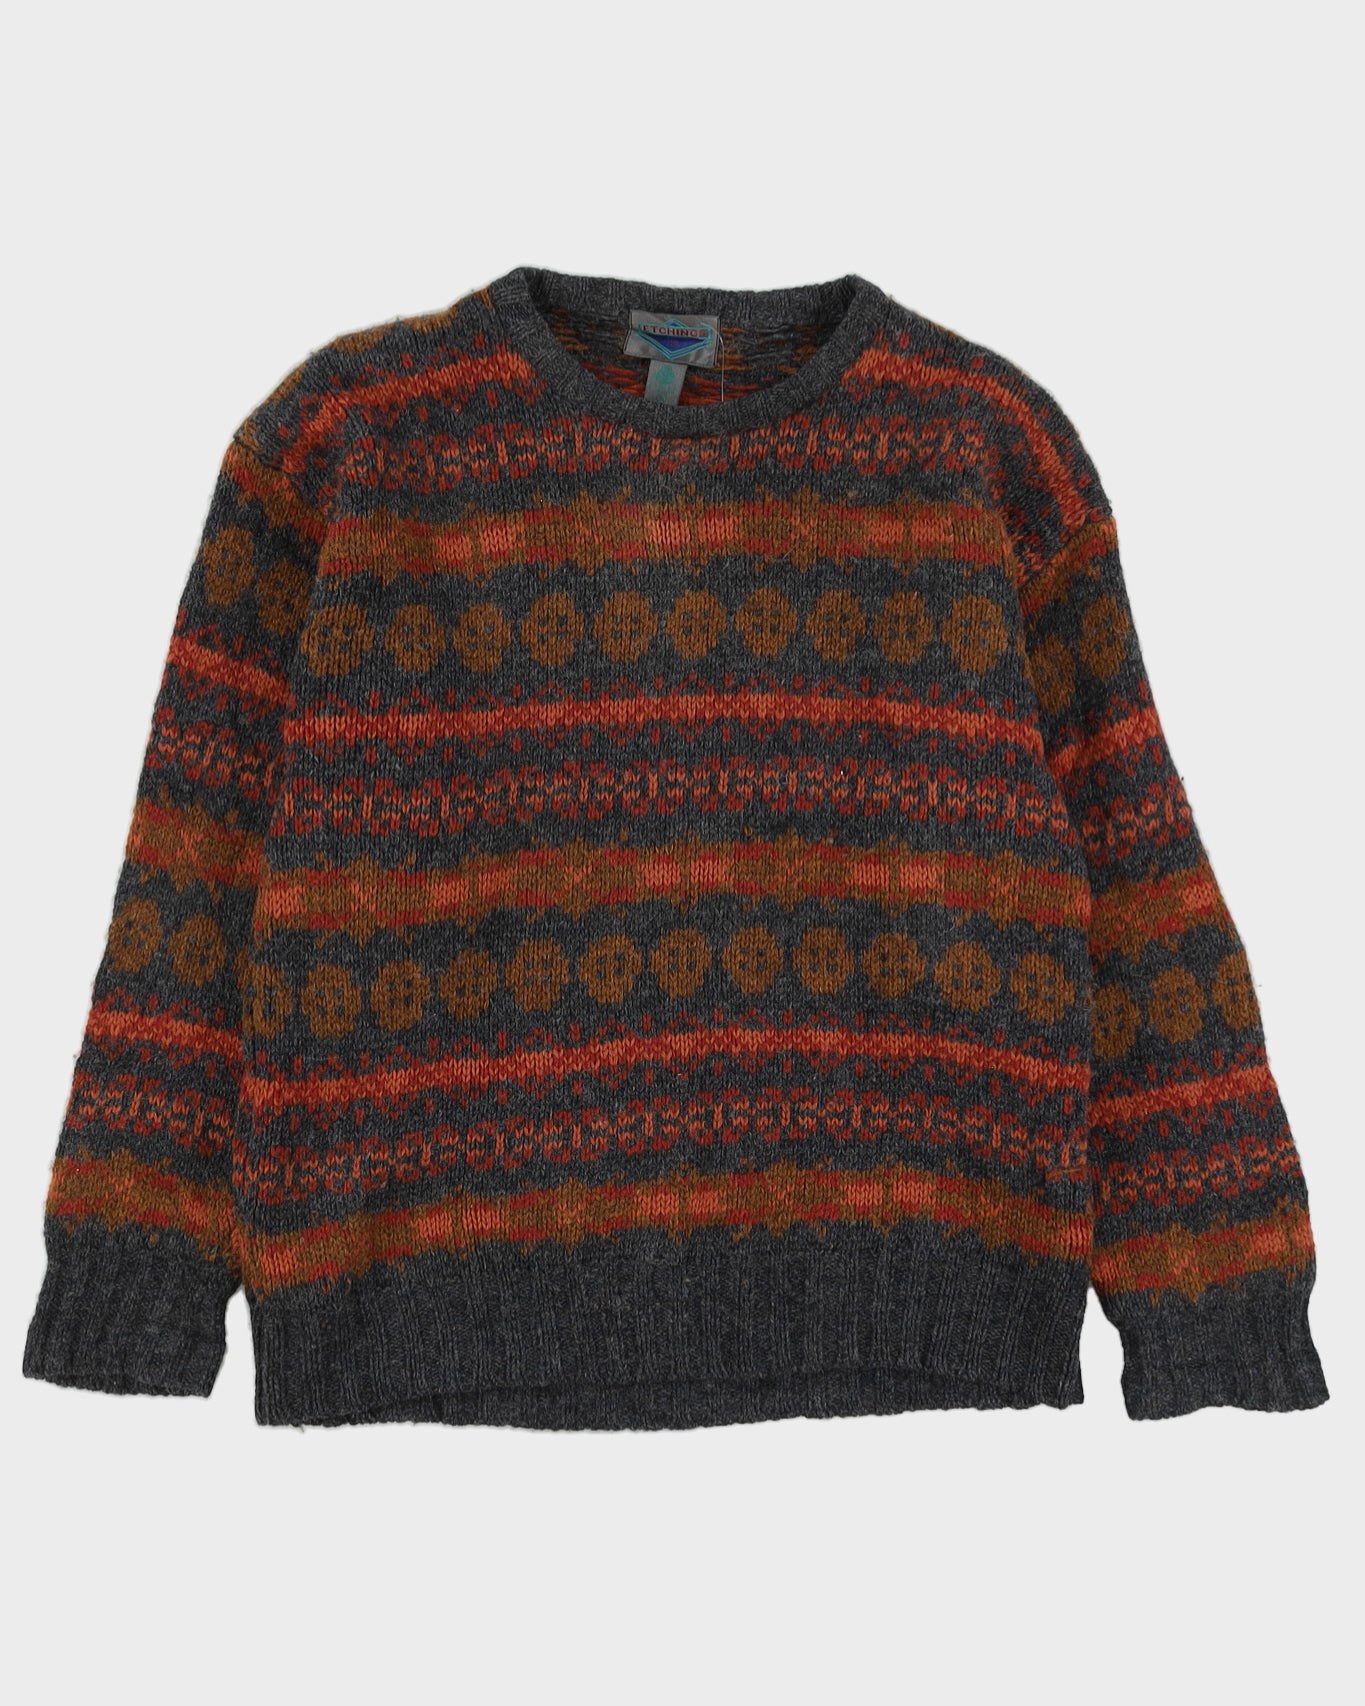 Grey And Orange Patterned Knitted Jumper - L